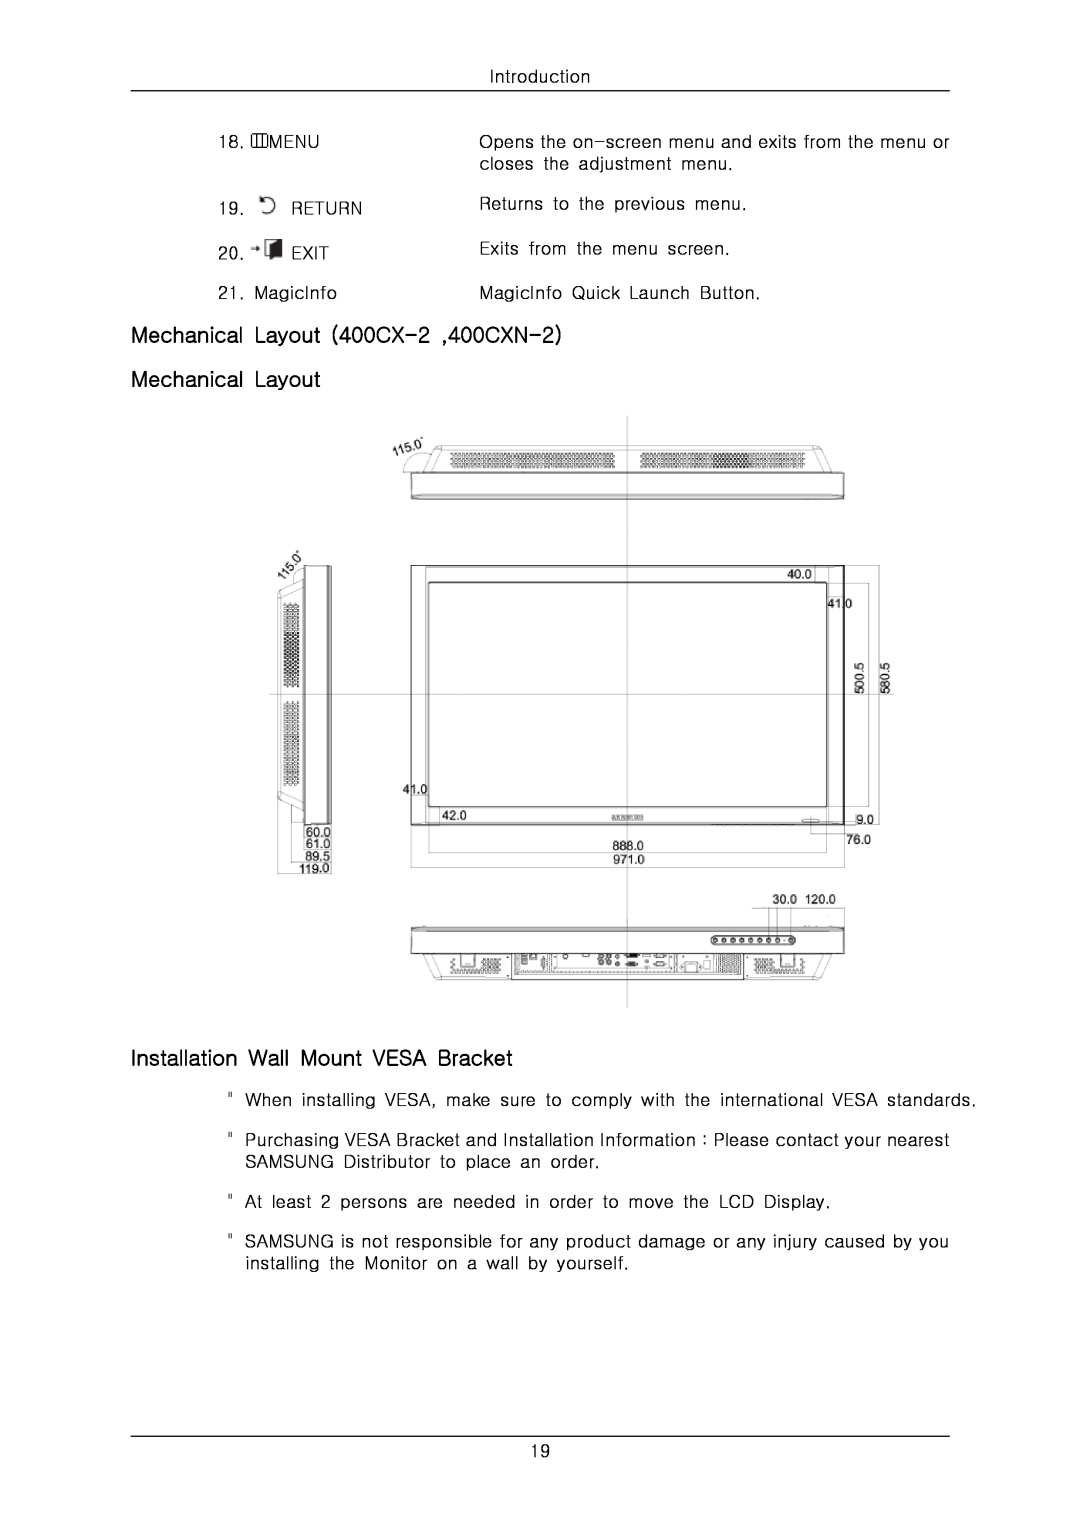 Samsung 460CXN-2, 460CX-2 Mechanical Layout 400CX-2 ,400CXN-2 Mechanical Layout, Installation Wall Mount VESA Bracket 